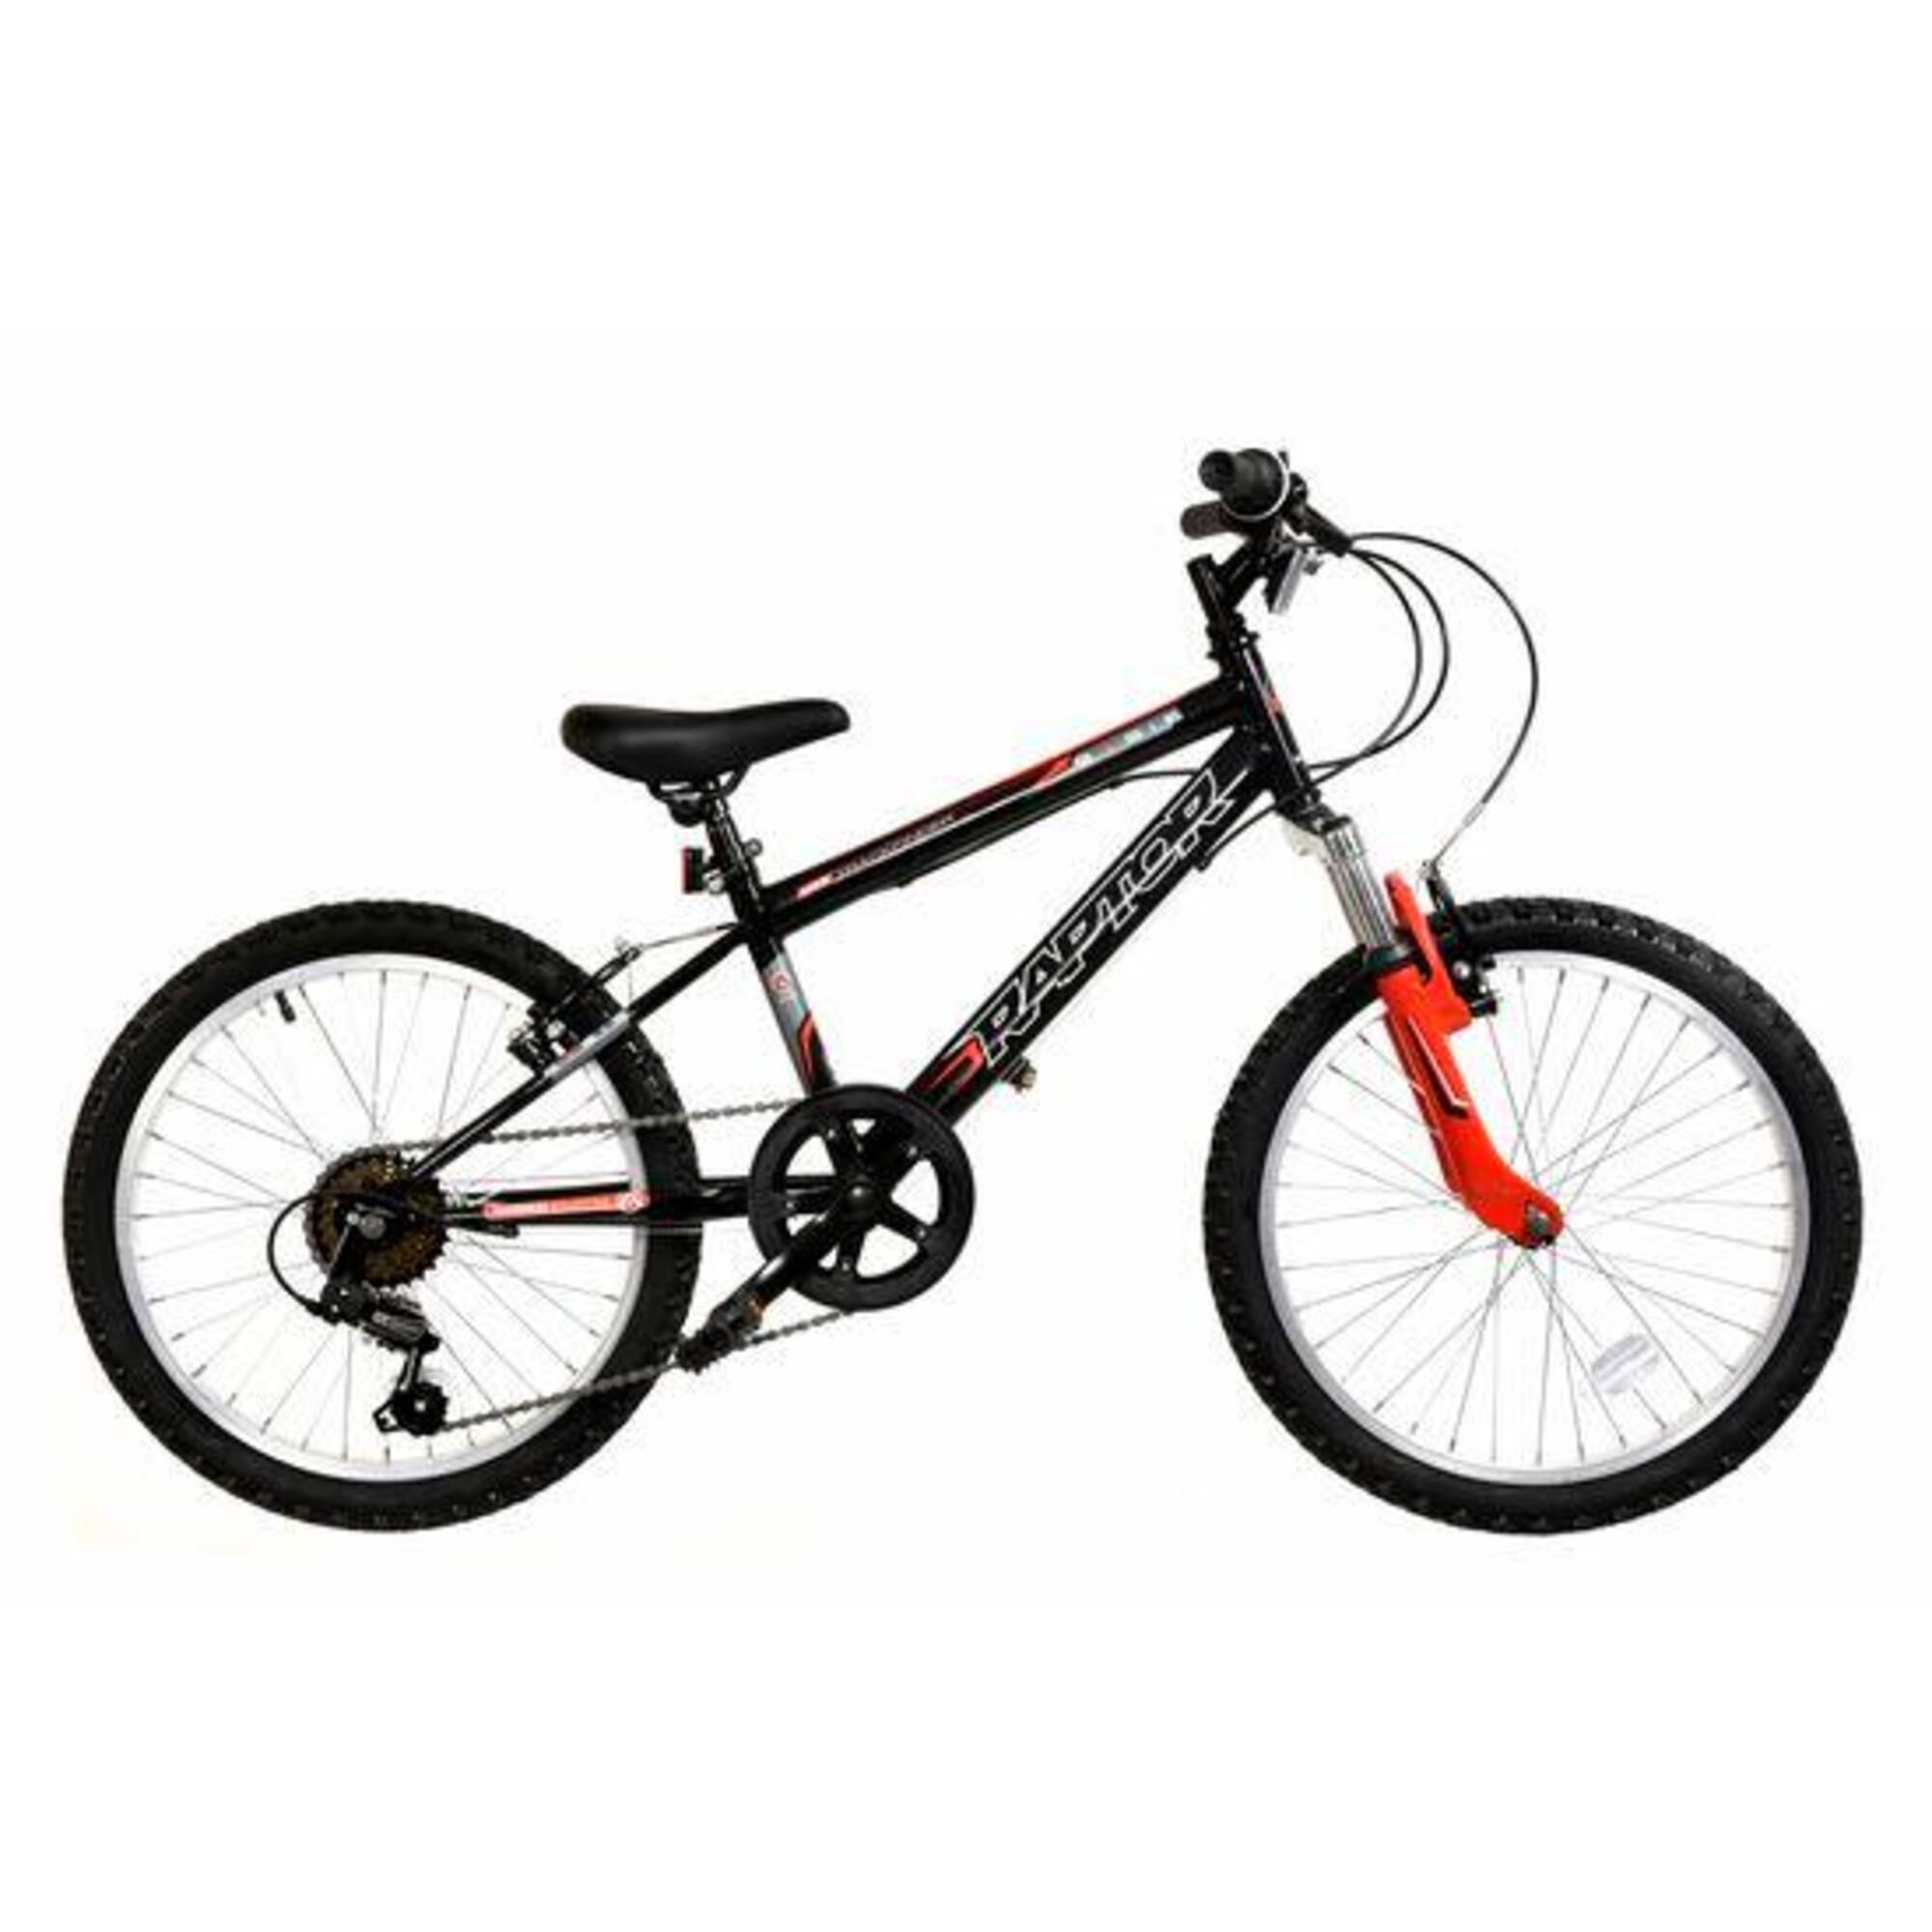 Basis Raptor Junior Hardtail Mountain Bike 20in Wheel - Gloss Black/Red 1/5